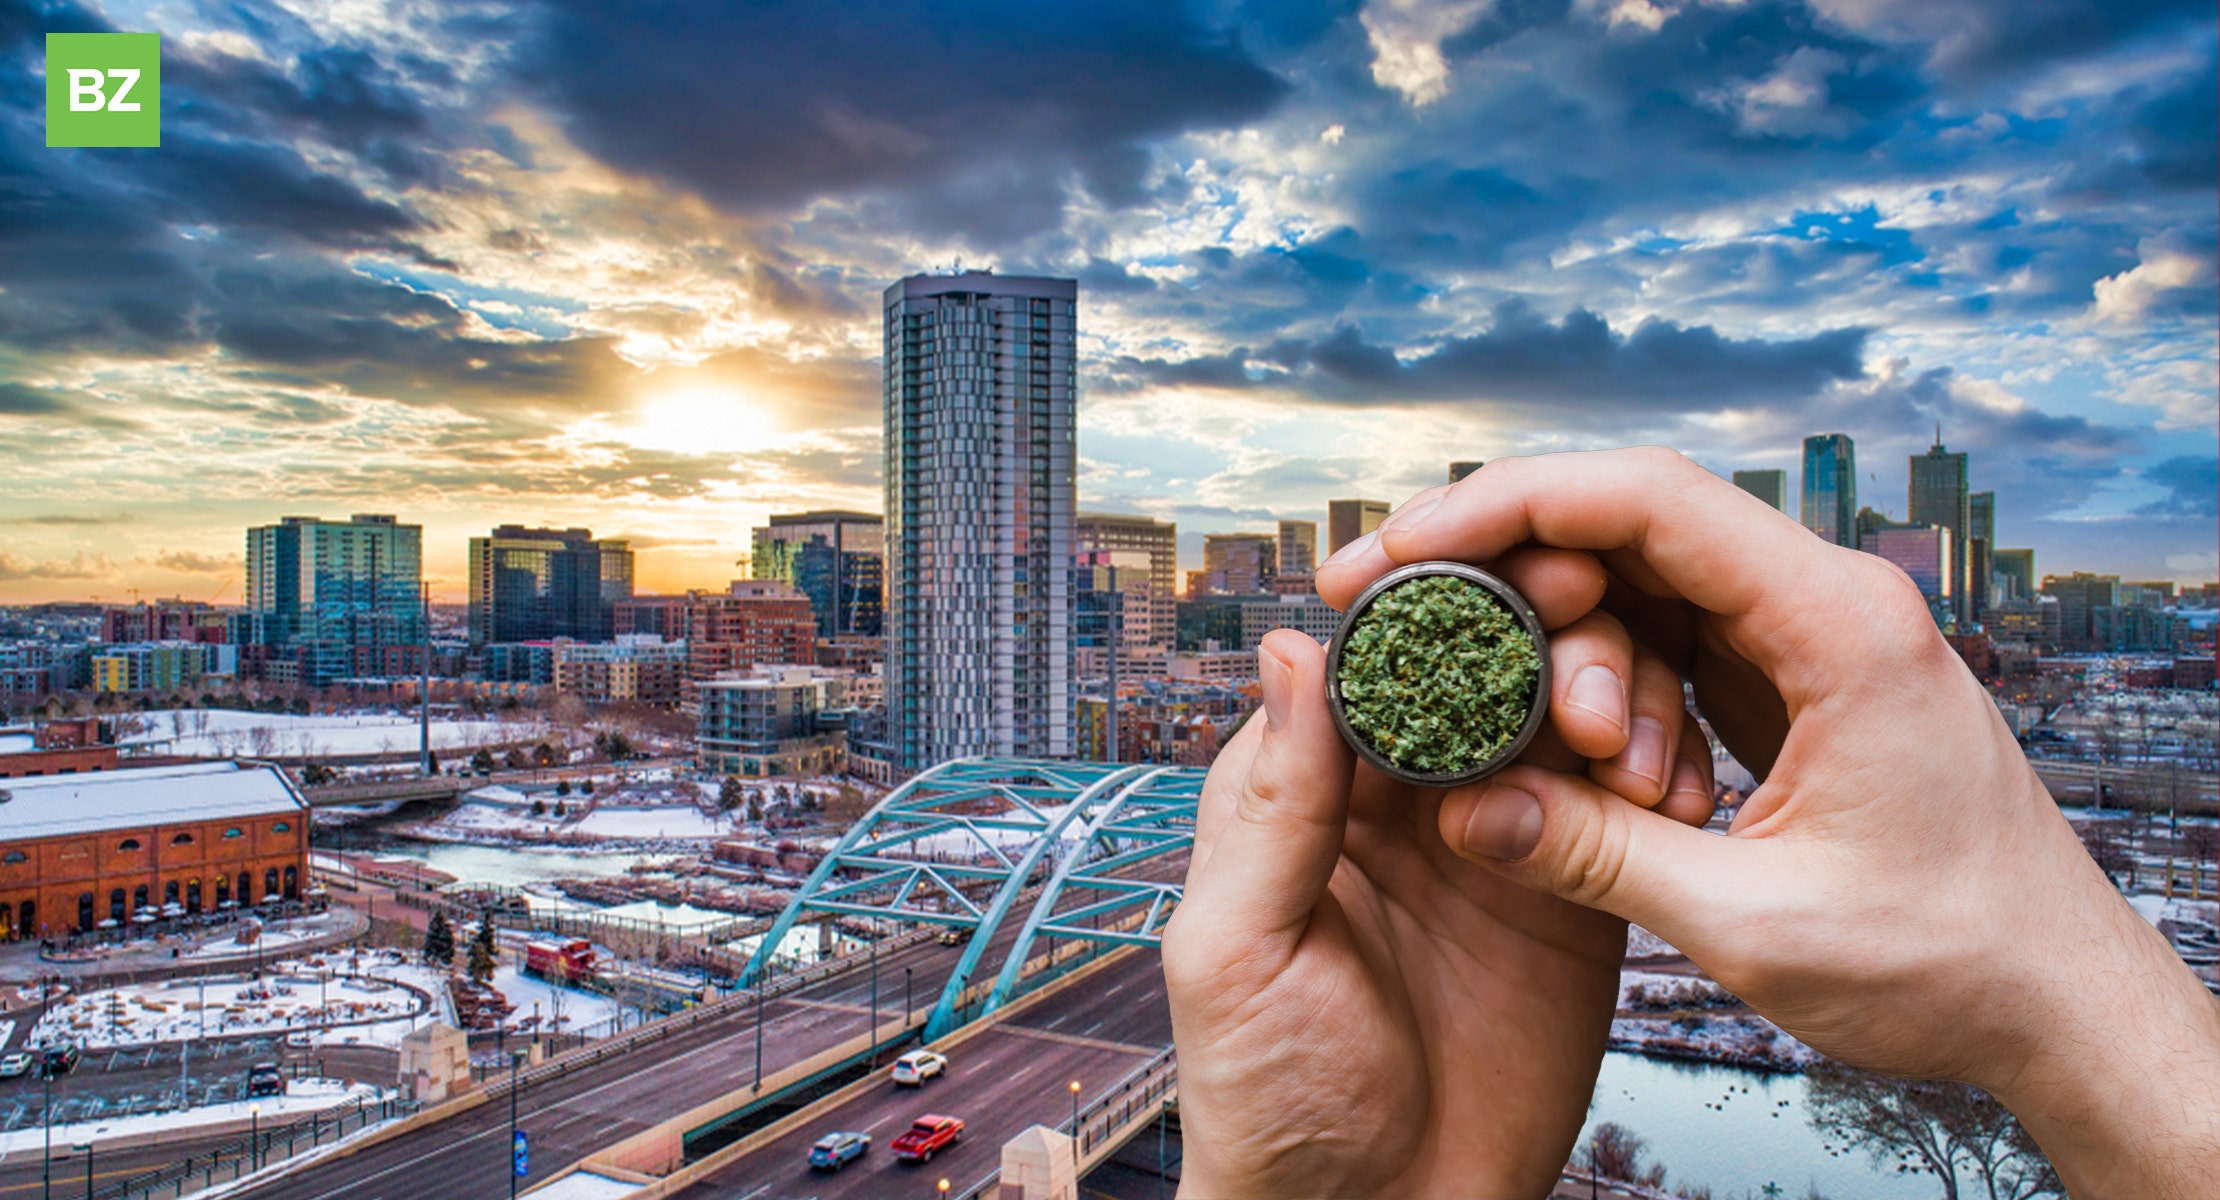 Schwazze To Acquire 2 Adult Use Cannabis Dispensaries In Colorado